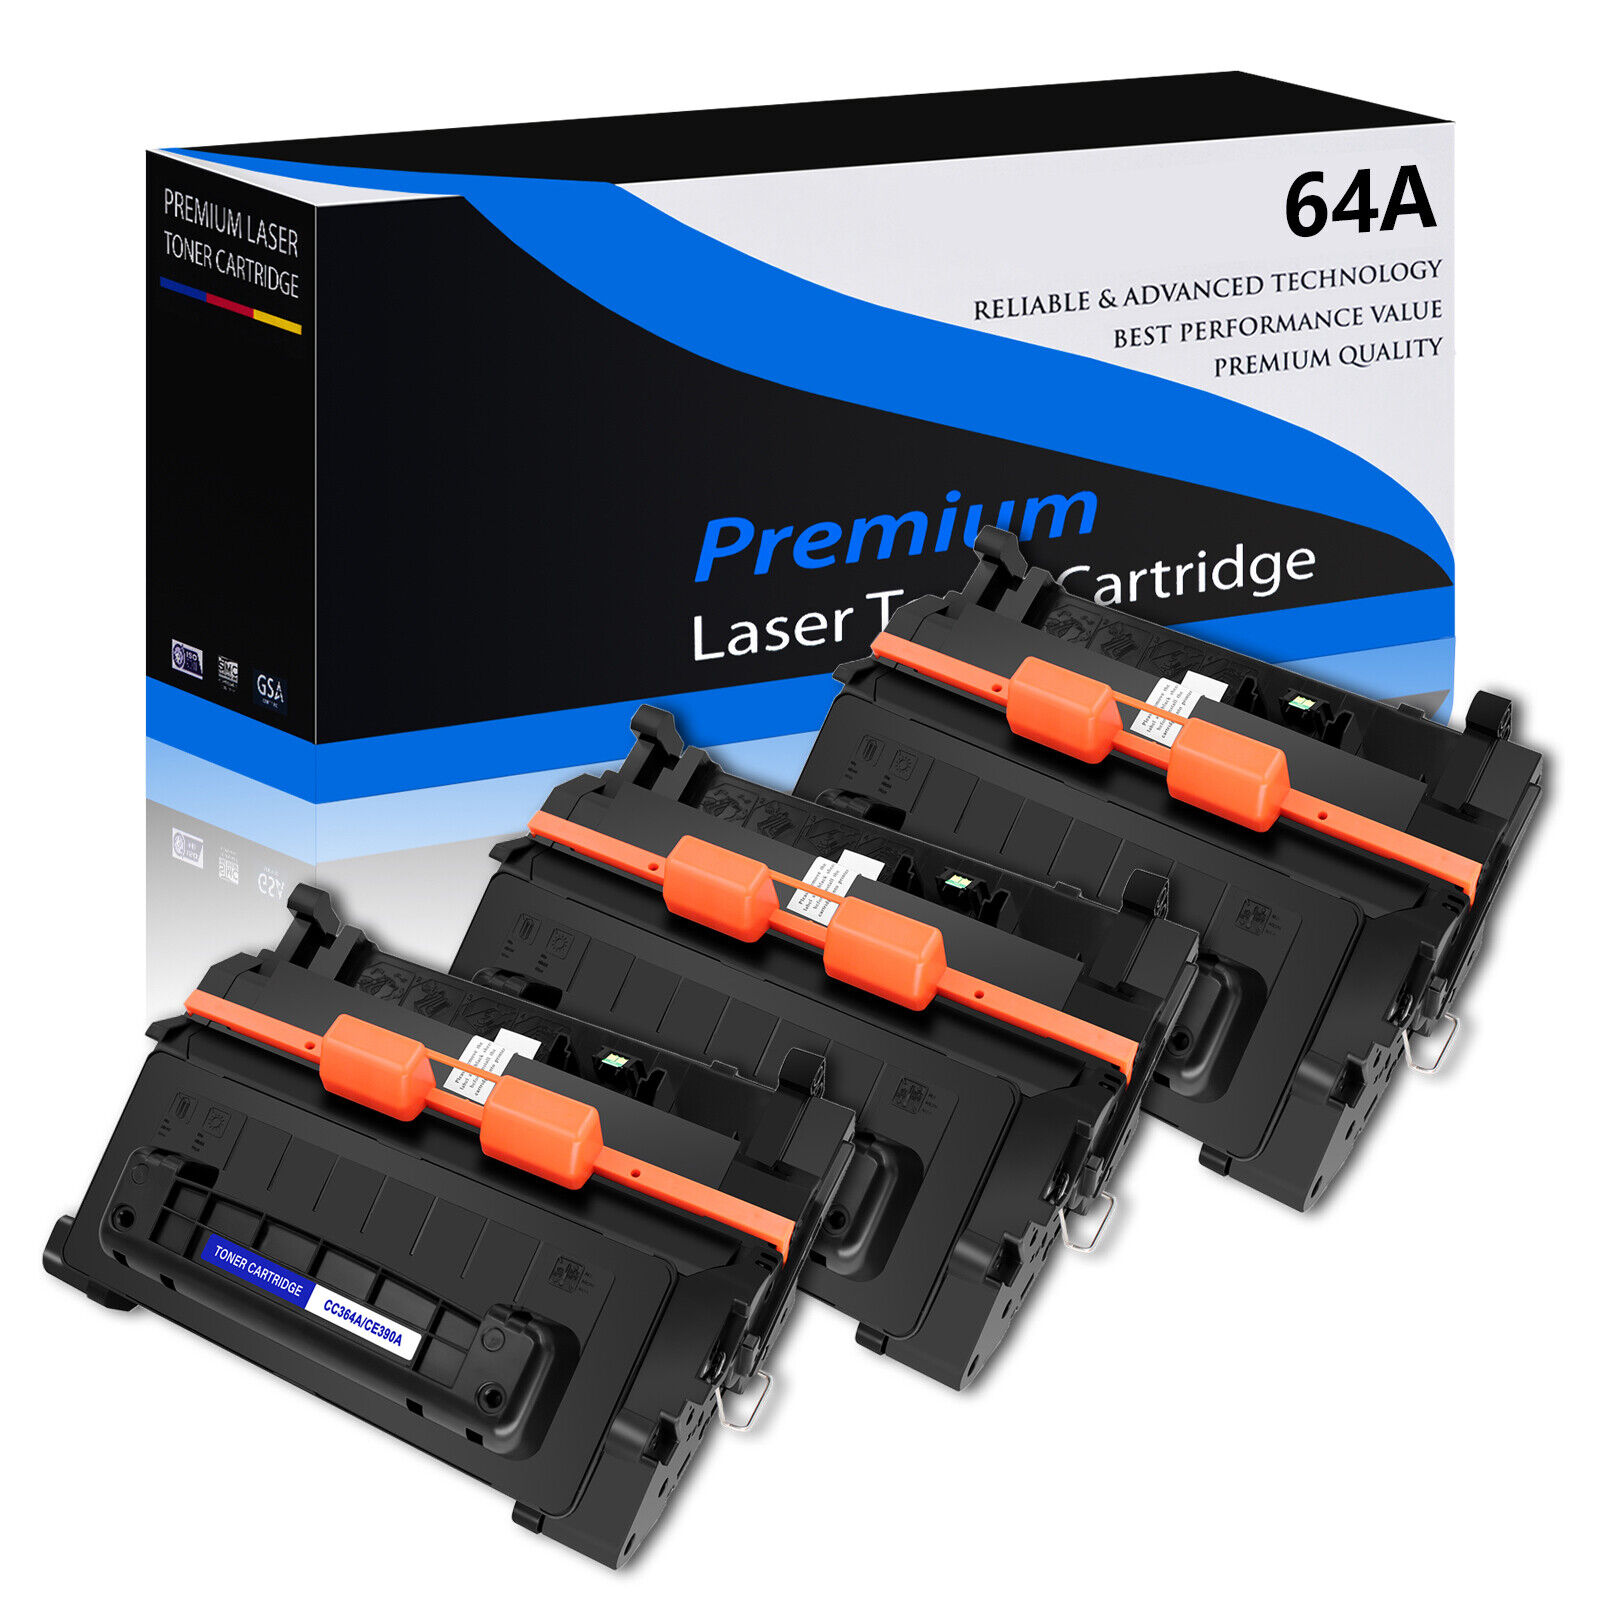 3PK CC364A 64A Toner Cartridge Compatible with HP LaserJet P4515n P4515tn P4515x